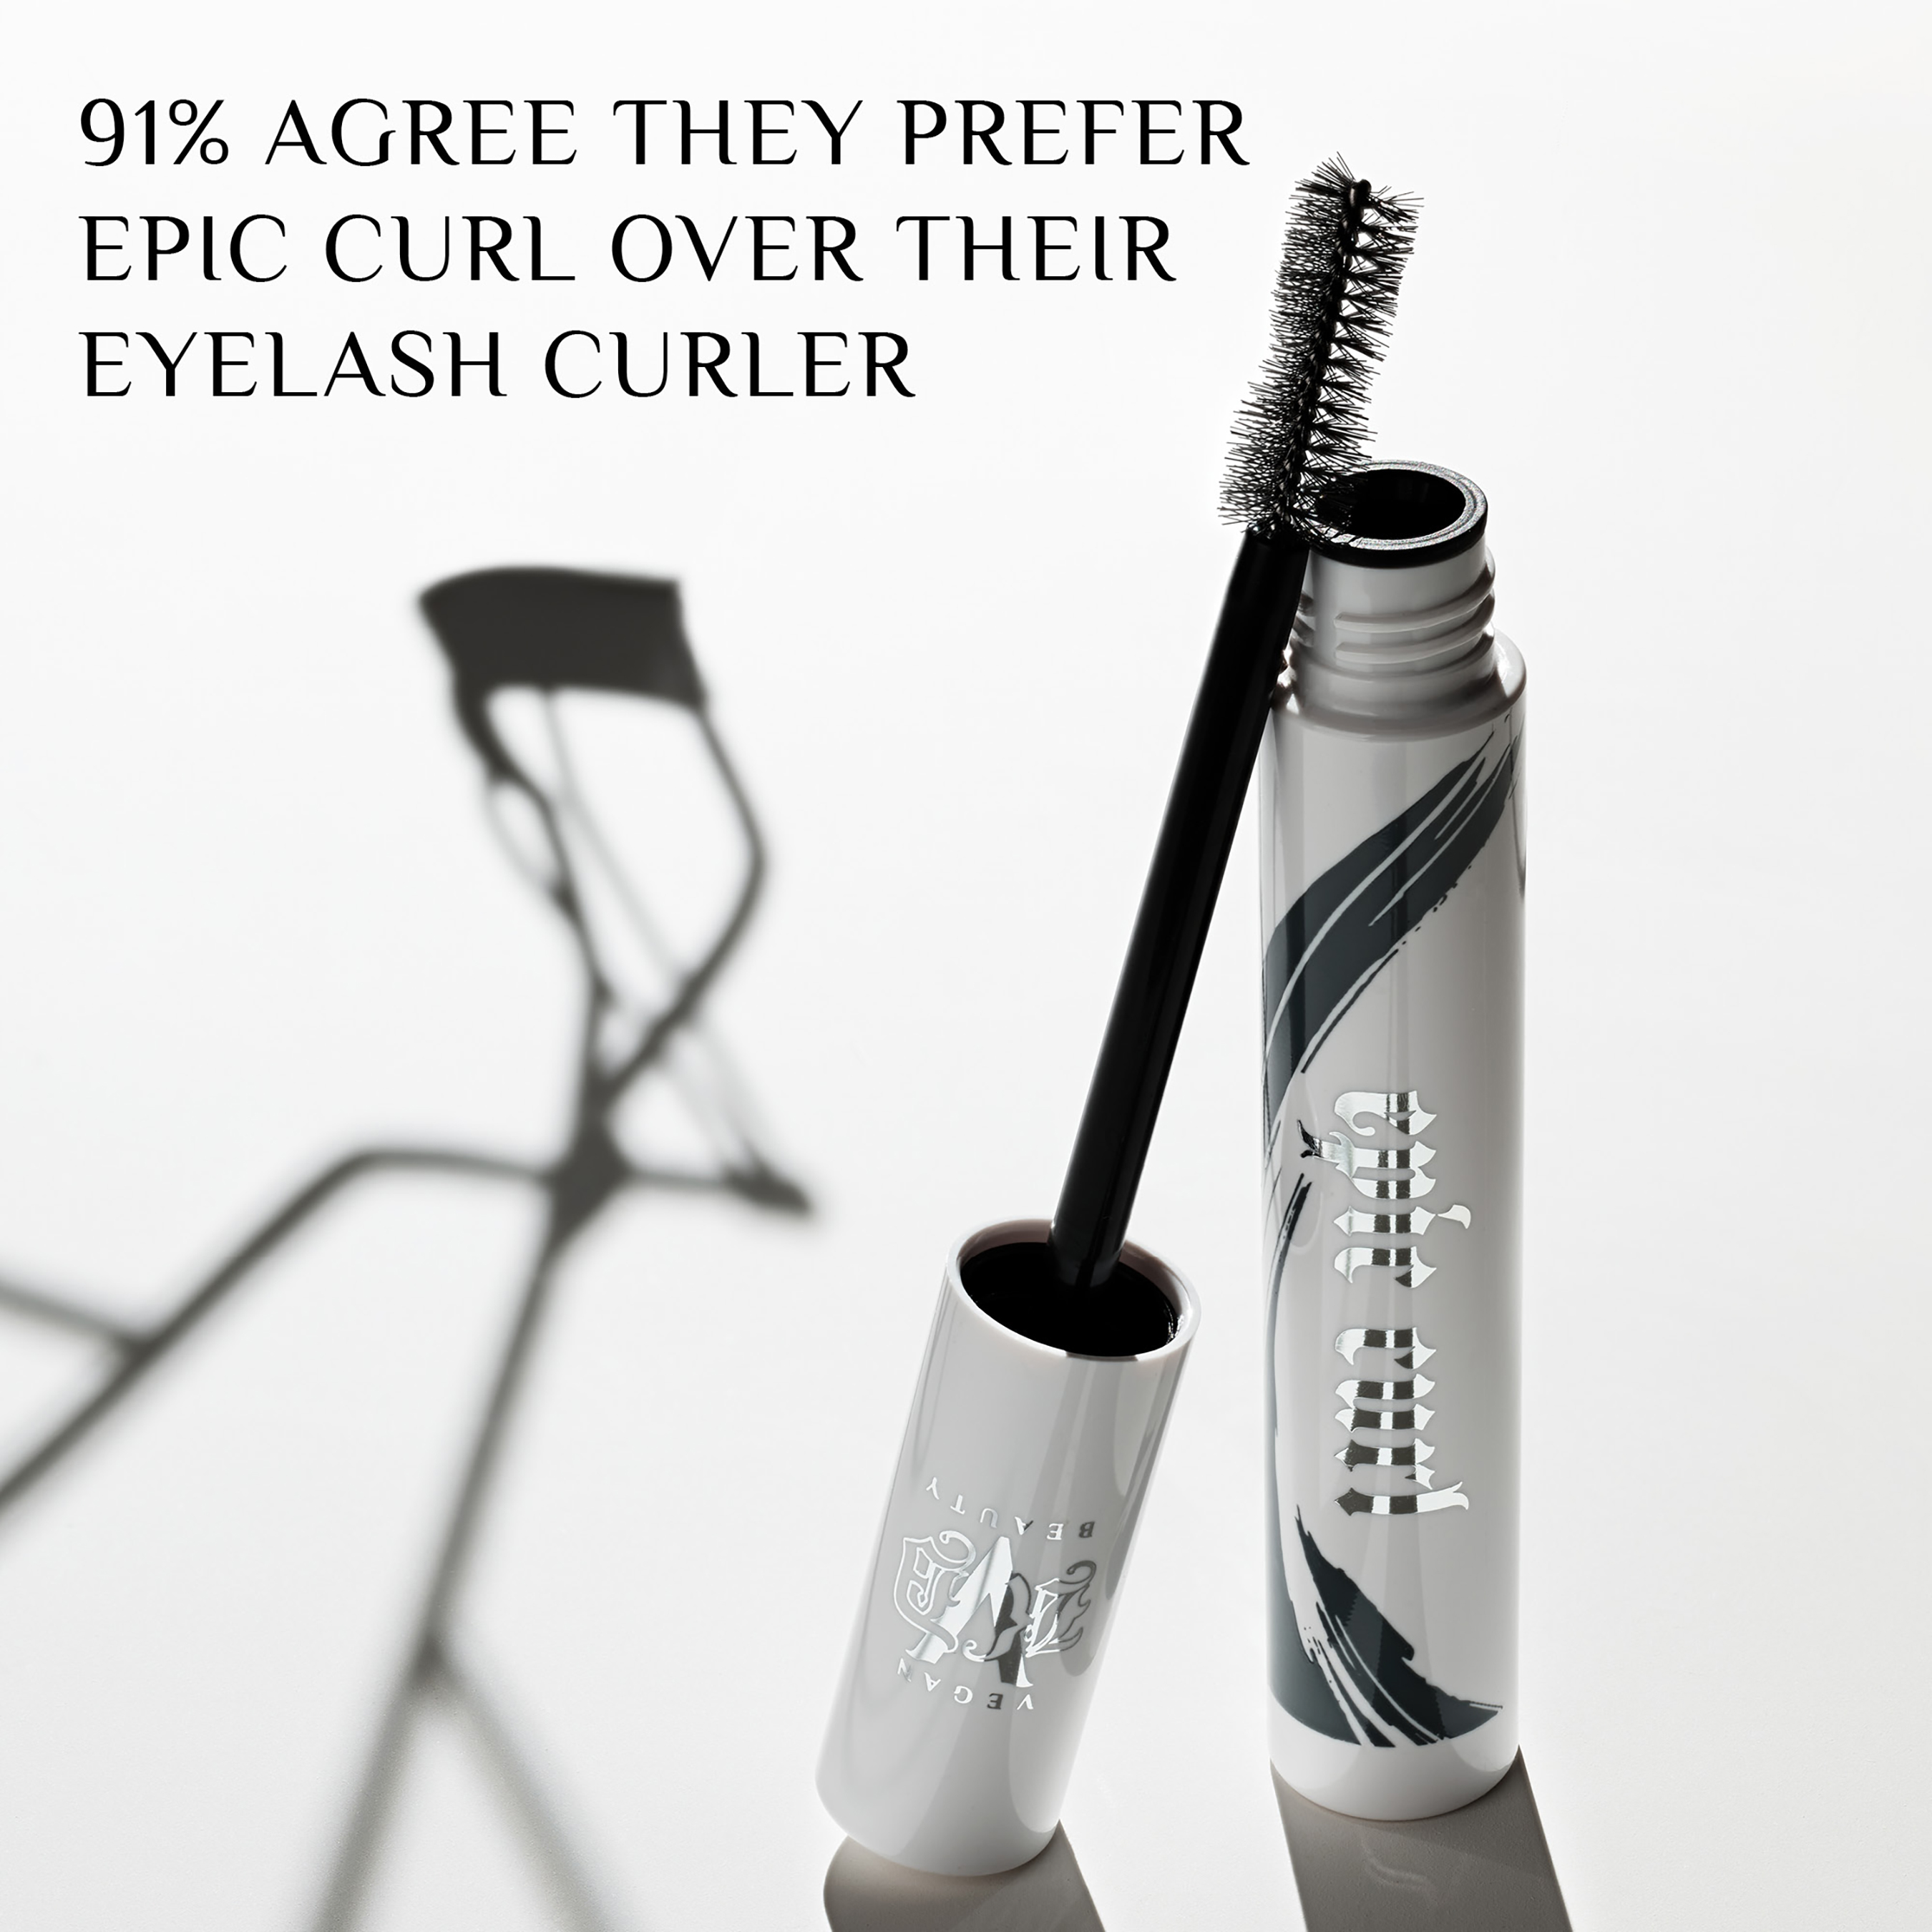 91% of people prefer KVD Vegan Beauty Epic Curl to their eyelash curlers